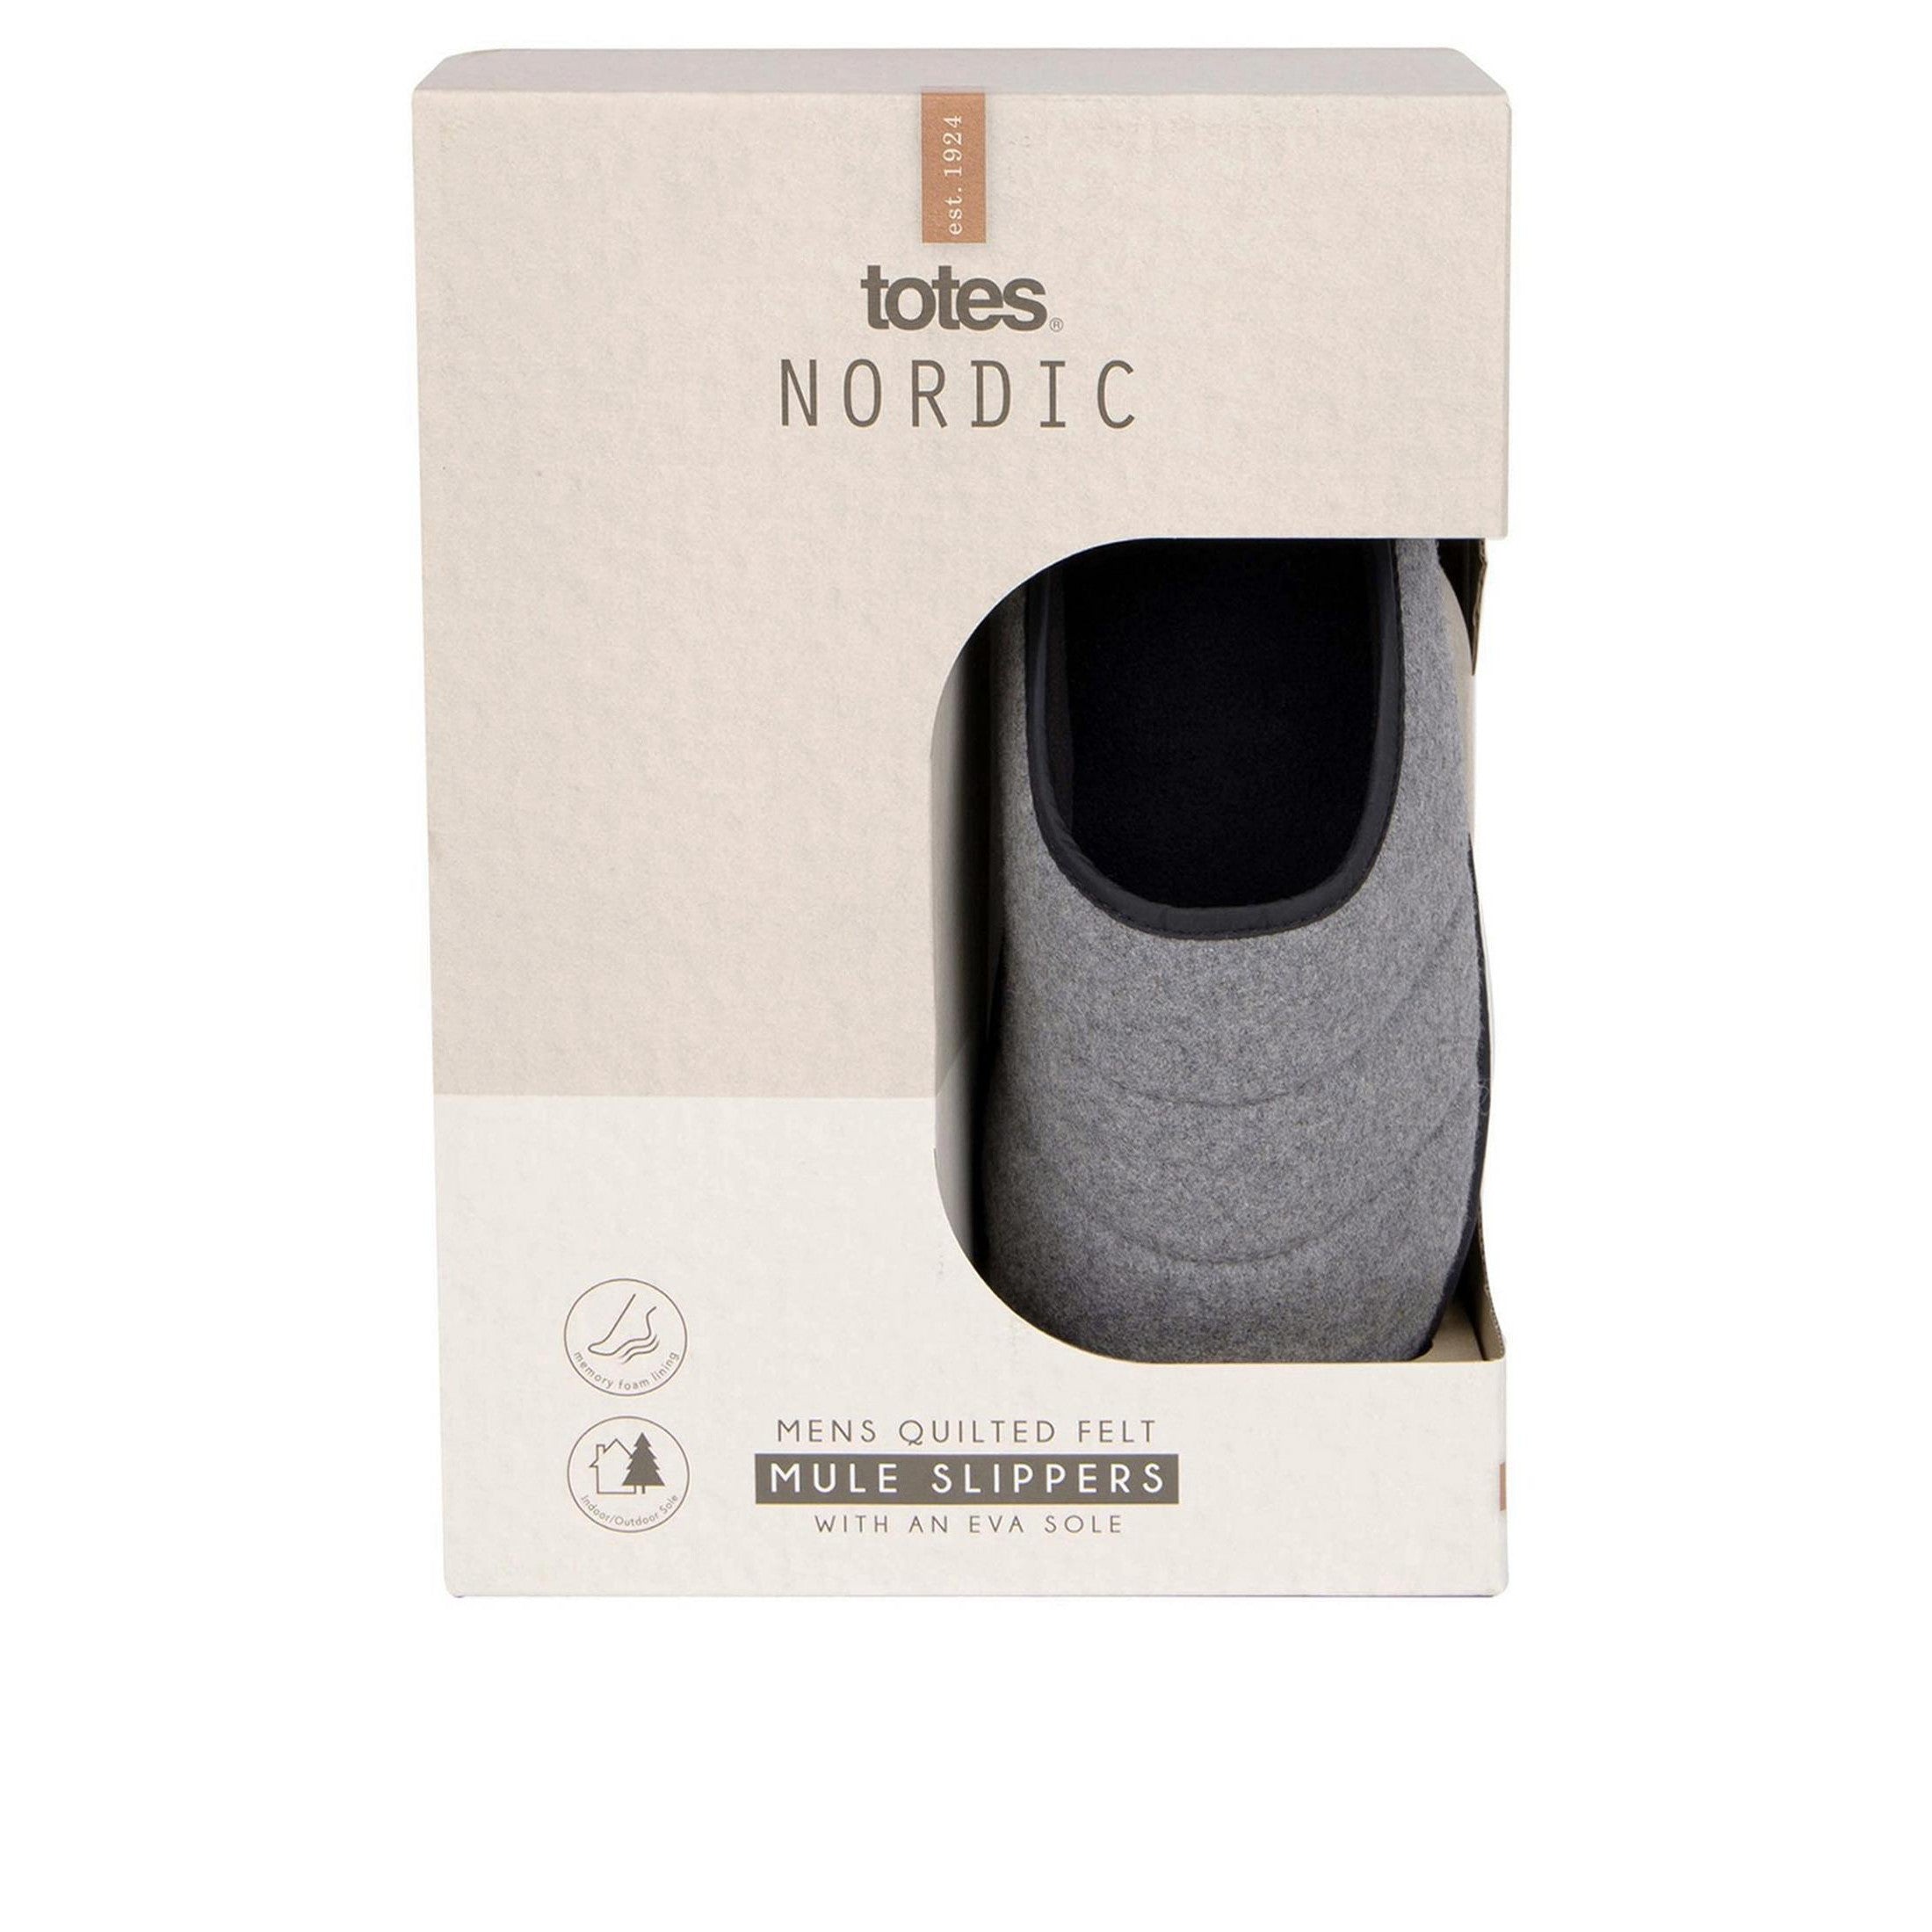 Totes Nordic Felt Mule Slippers - Multi - Size 11